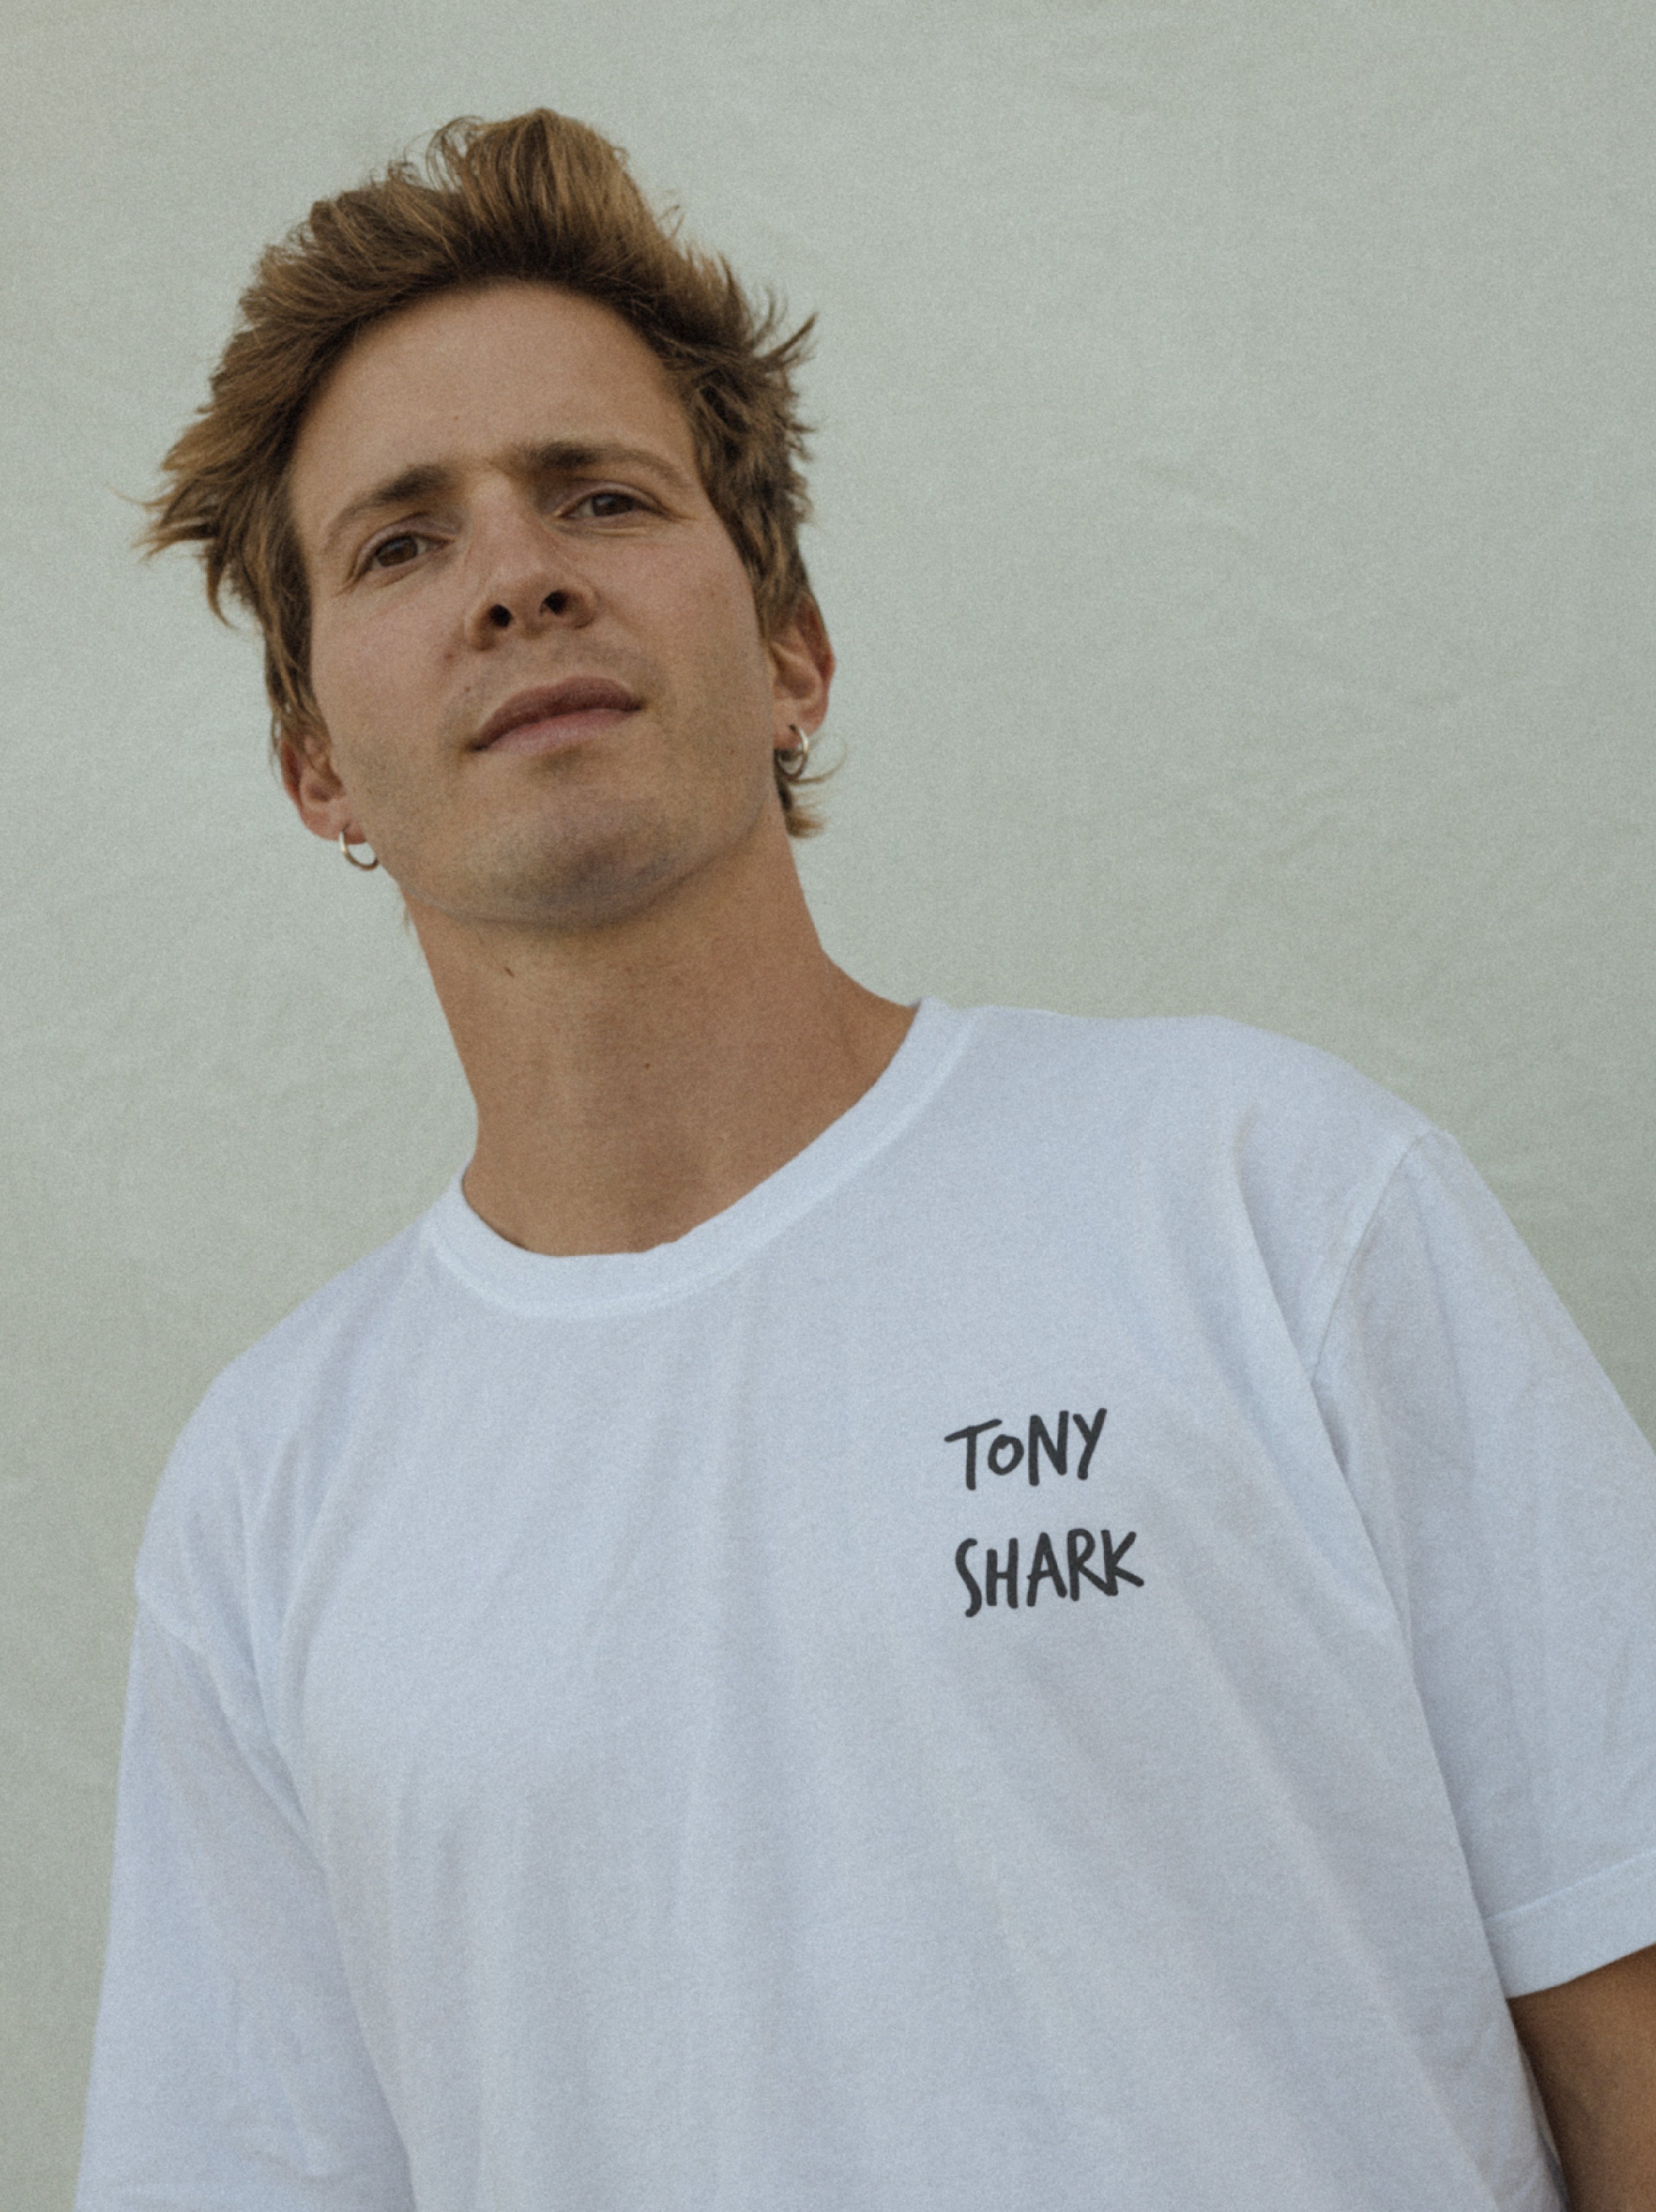 Tony Shark Illustrated White T-Shirt